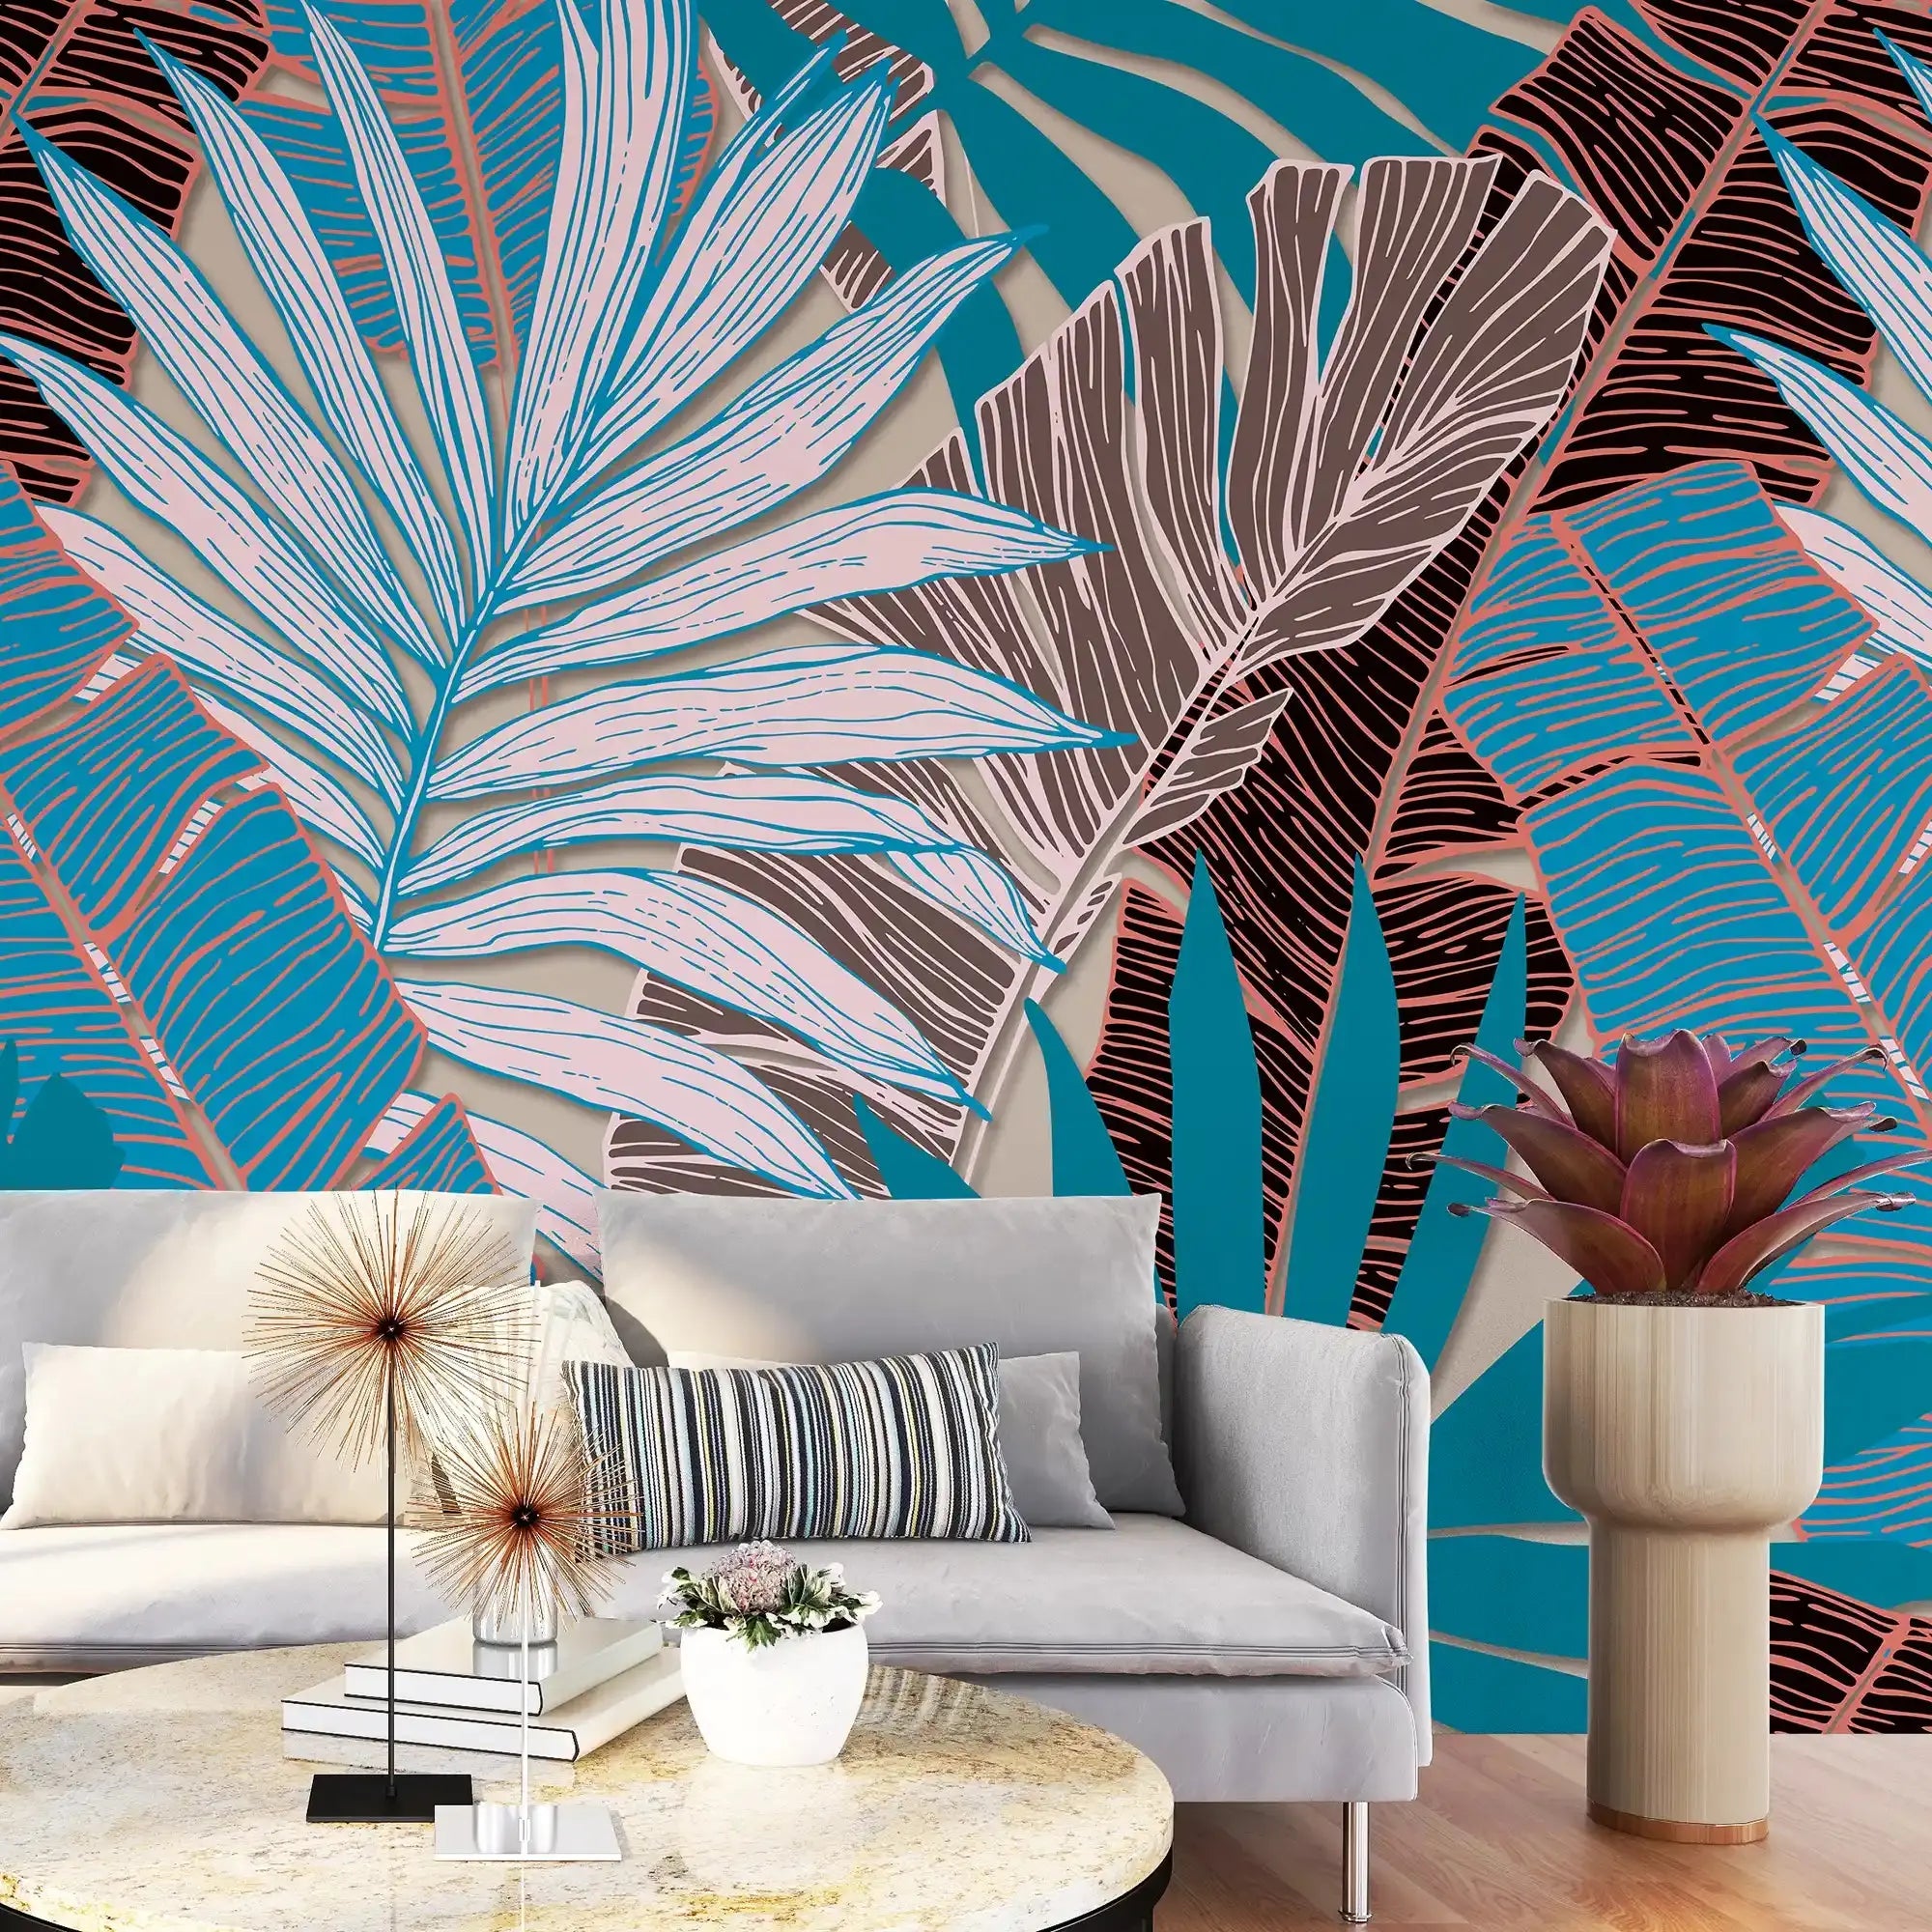 3103-B / Botanical Wall Mural - Self Adhesive, Palm Leaf Tropical Wallpaper for Any Room - Artevella